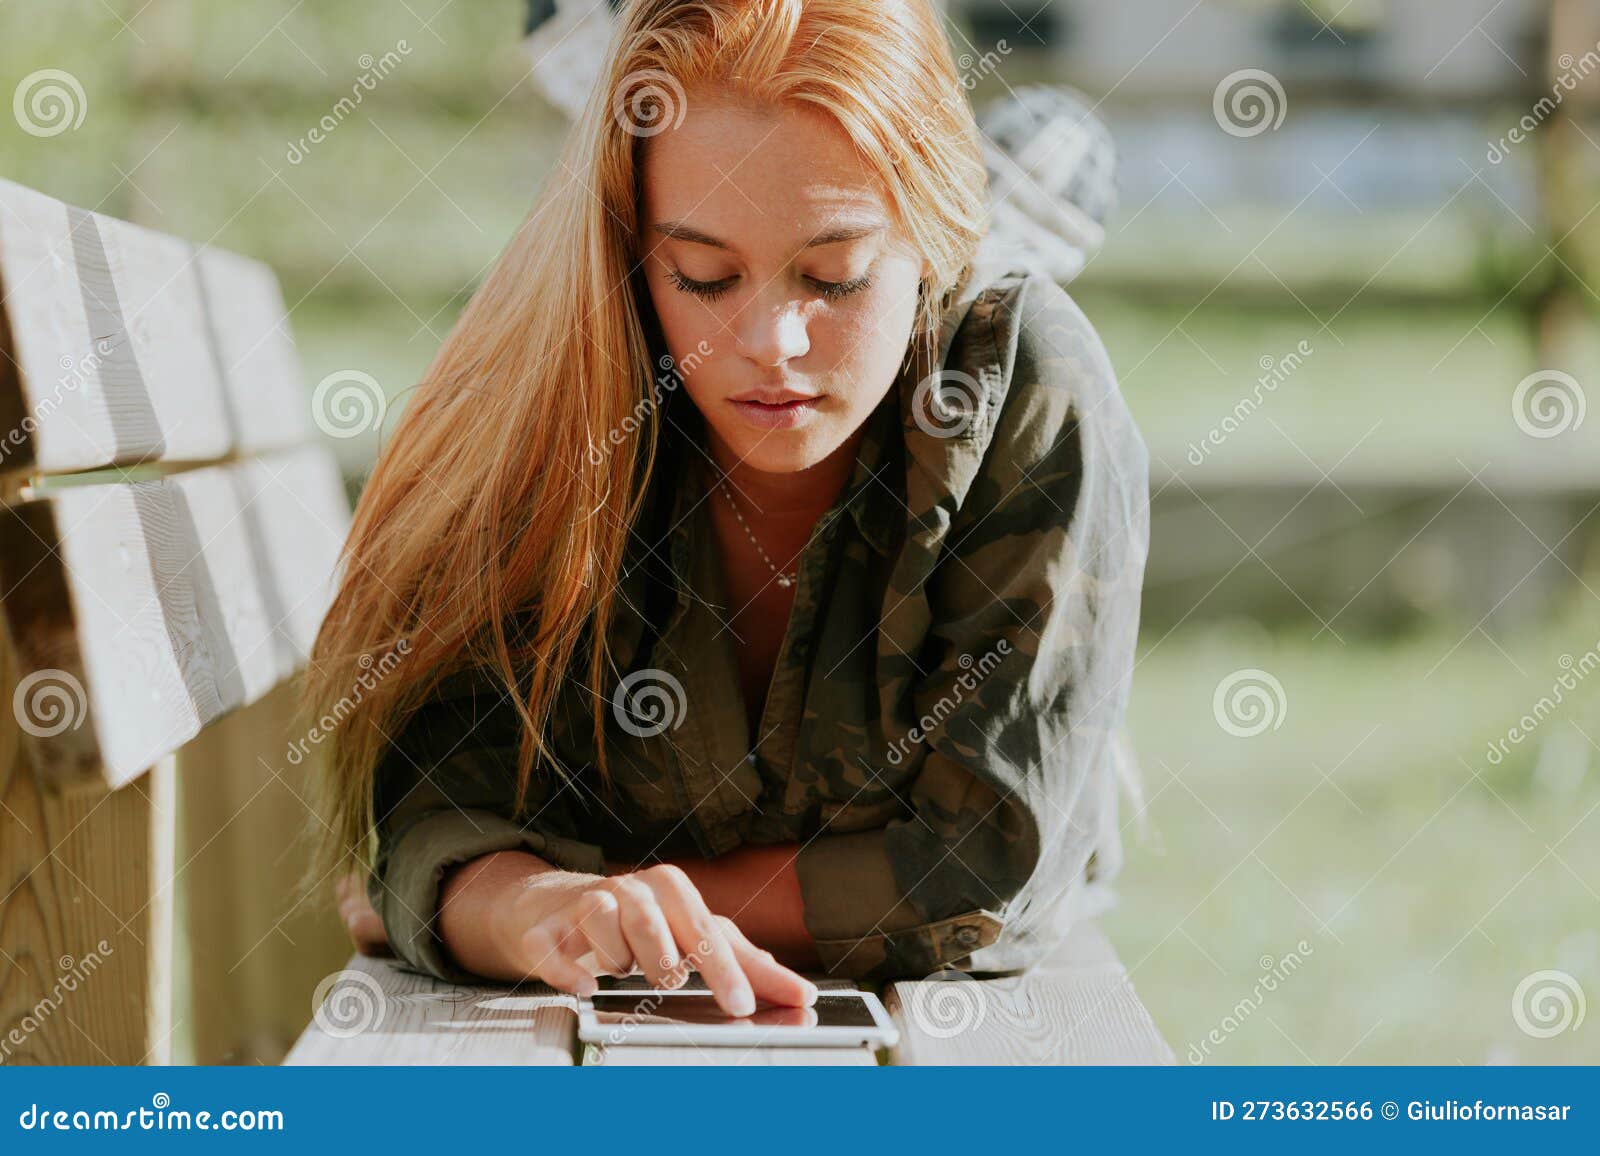 blonde girl, casual-sporty attire, digital tablet